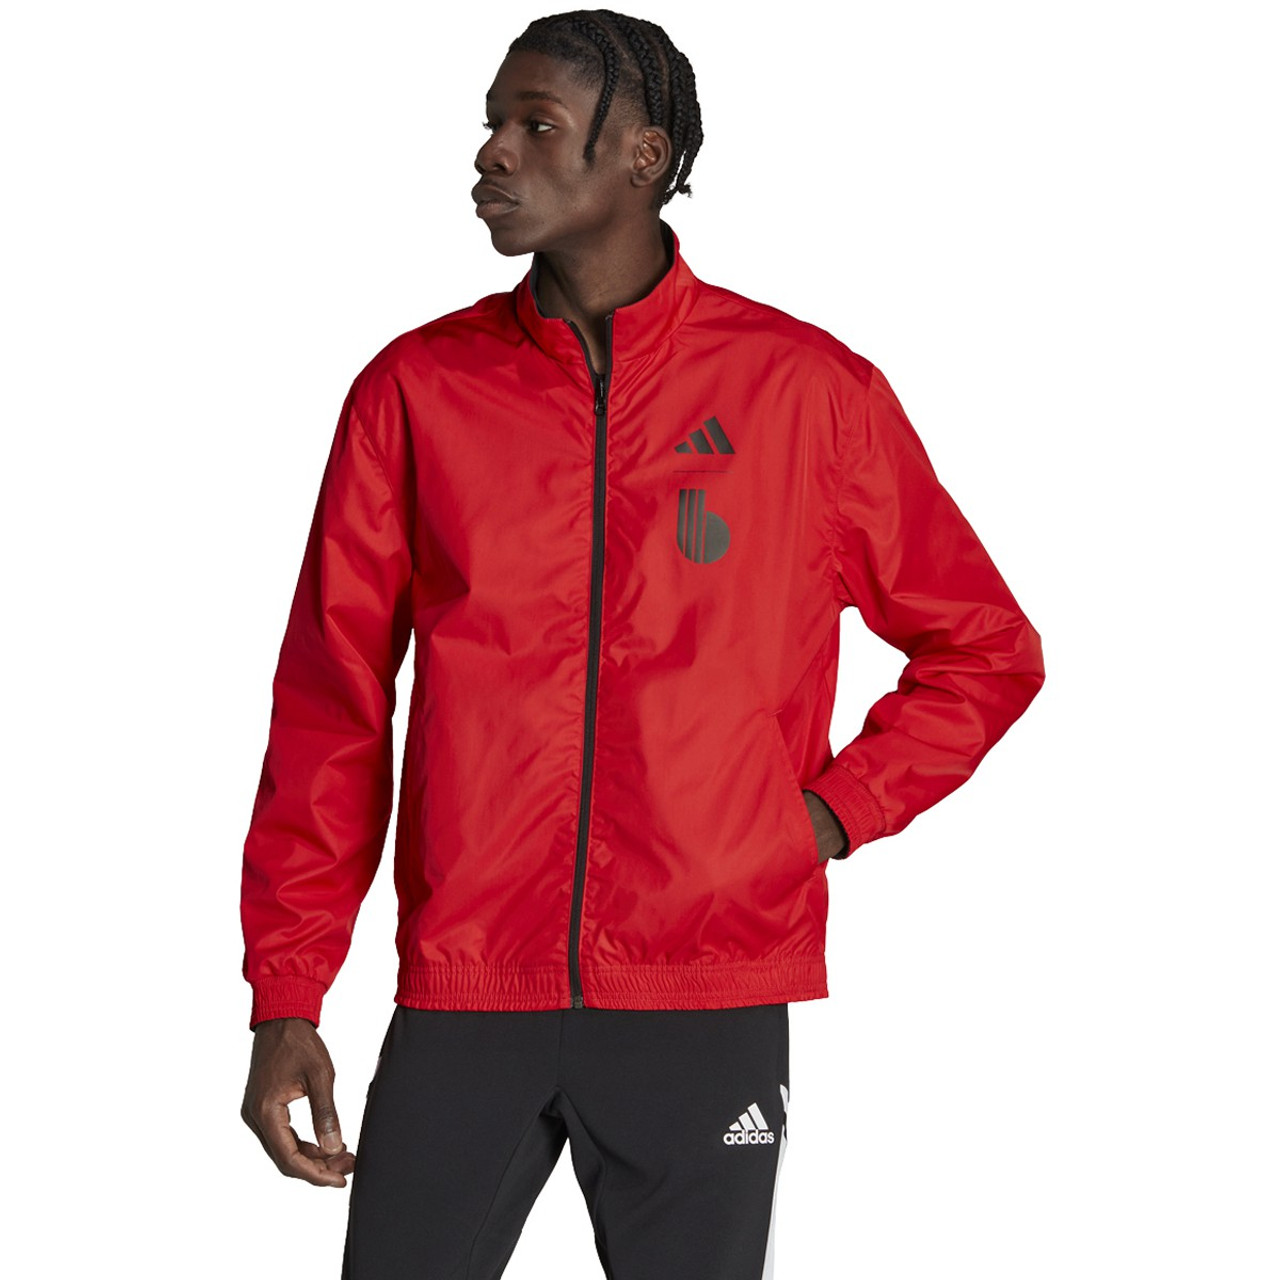 adidas BELGIUM ANTHEM Soccer Track Jacket, Black-Red